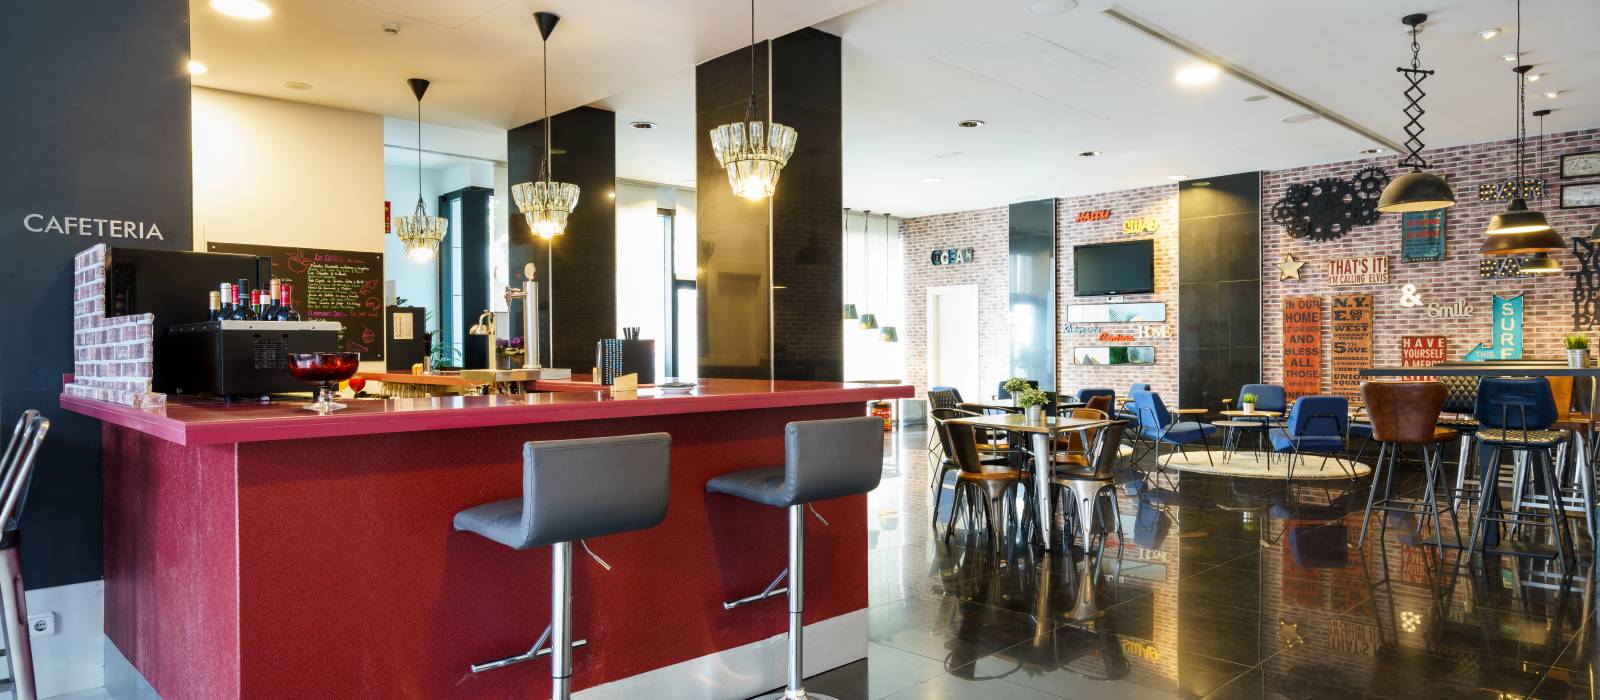 Servicios Hotel Malaga - Vincci Hoteles - Bar Lounge Room Star